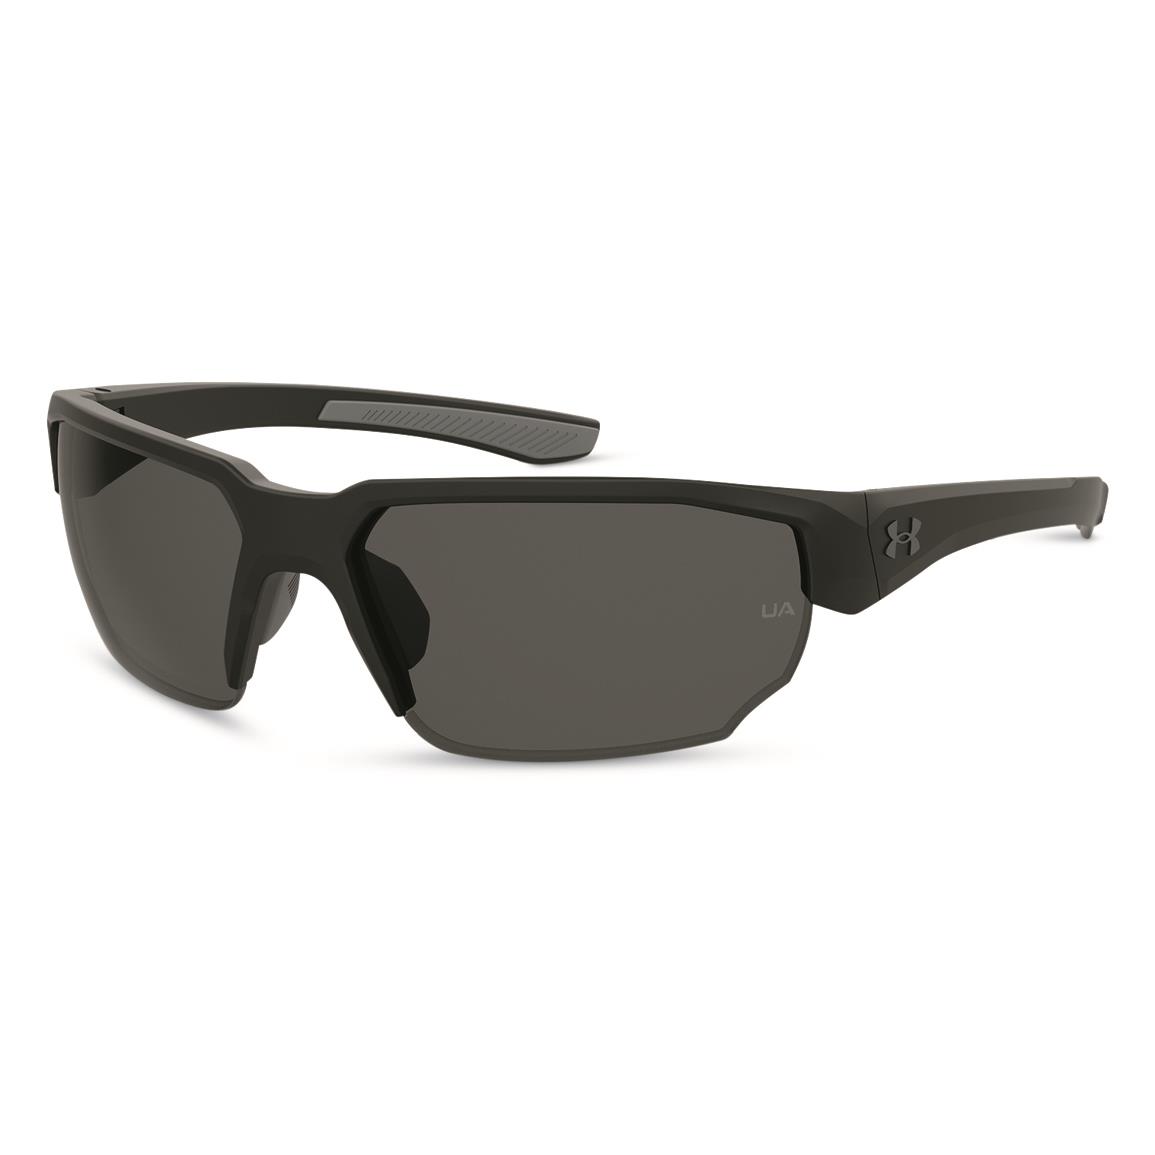 Under Armour Blitzing Polarized Sunglasses, Matte Black/gray Polarized